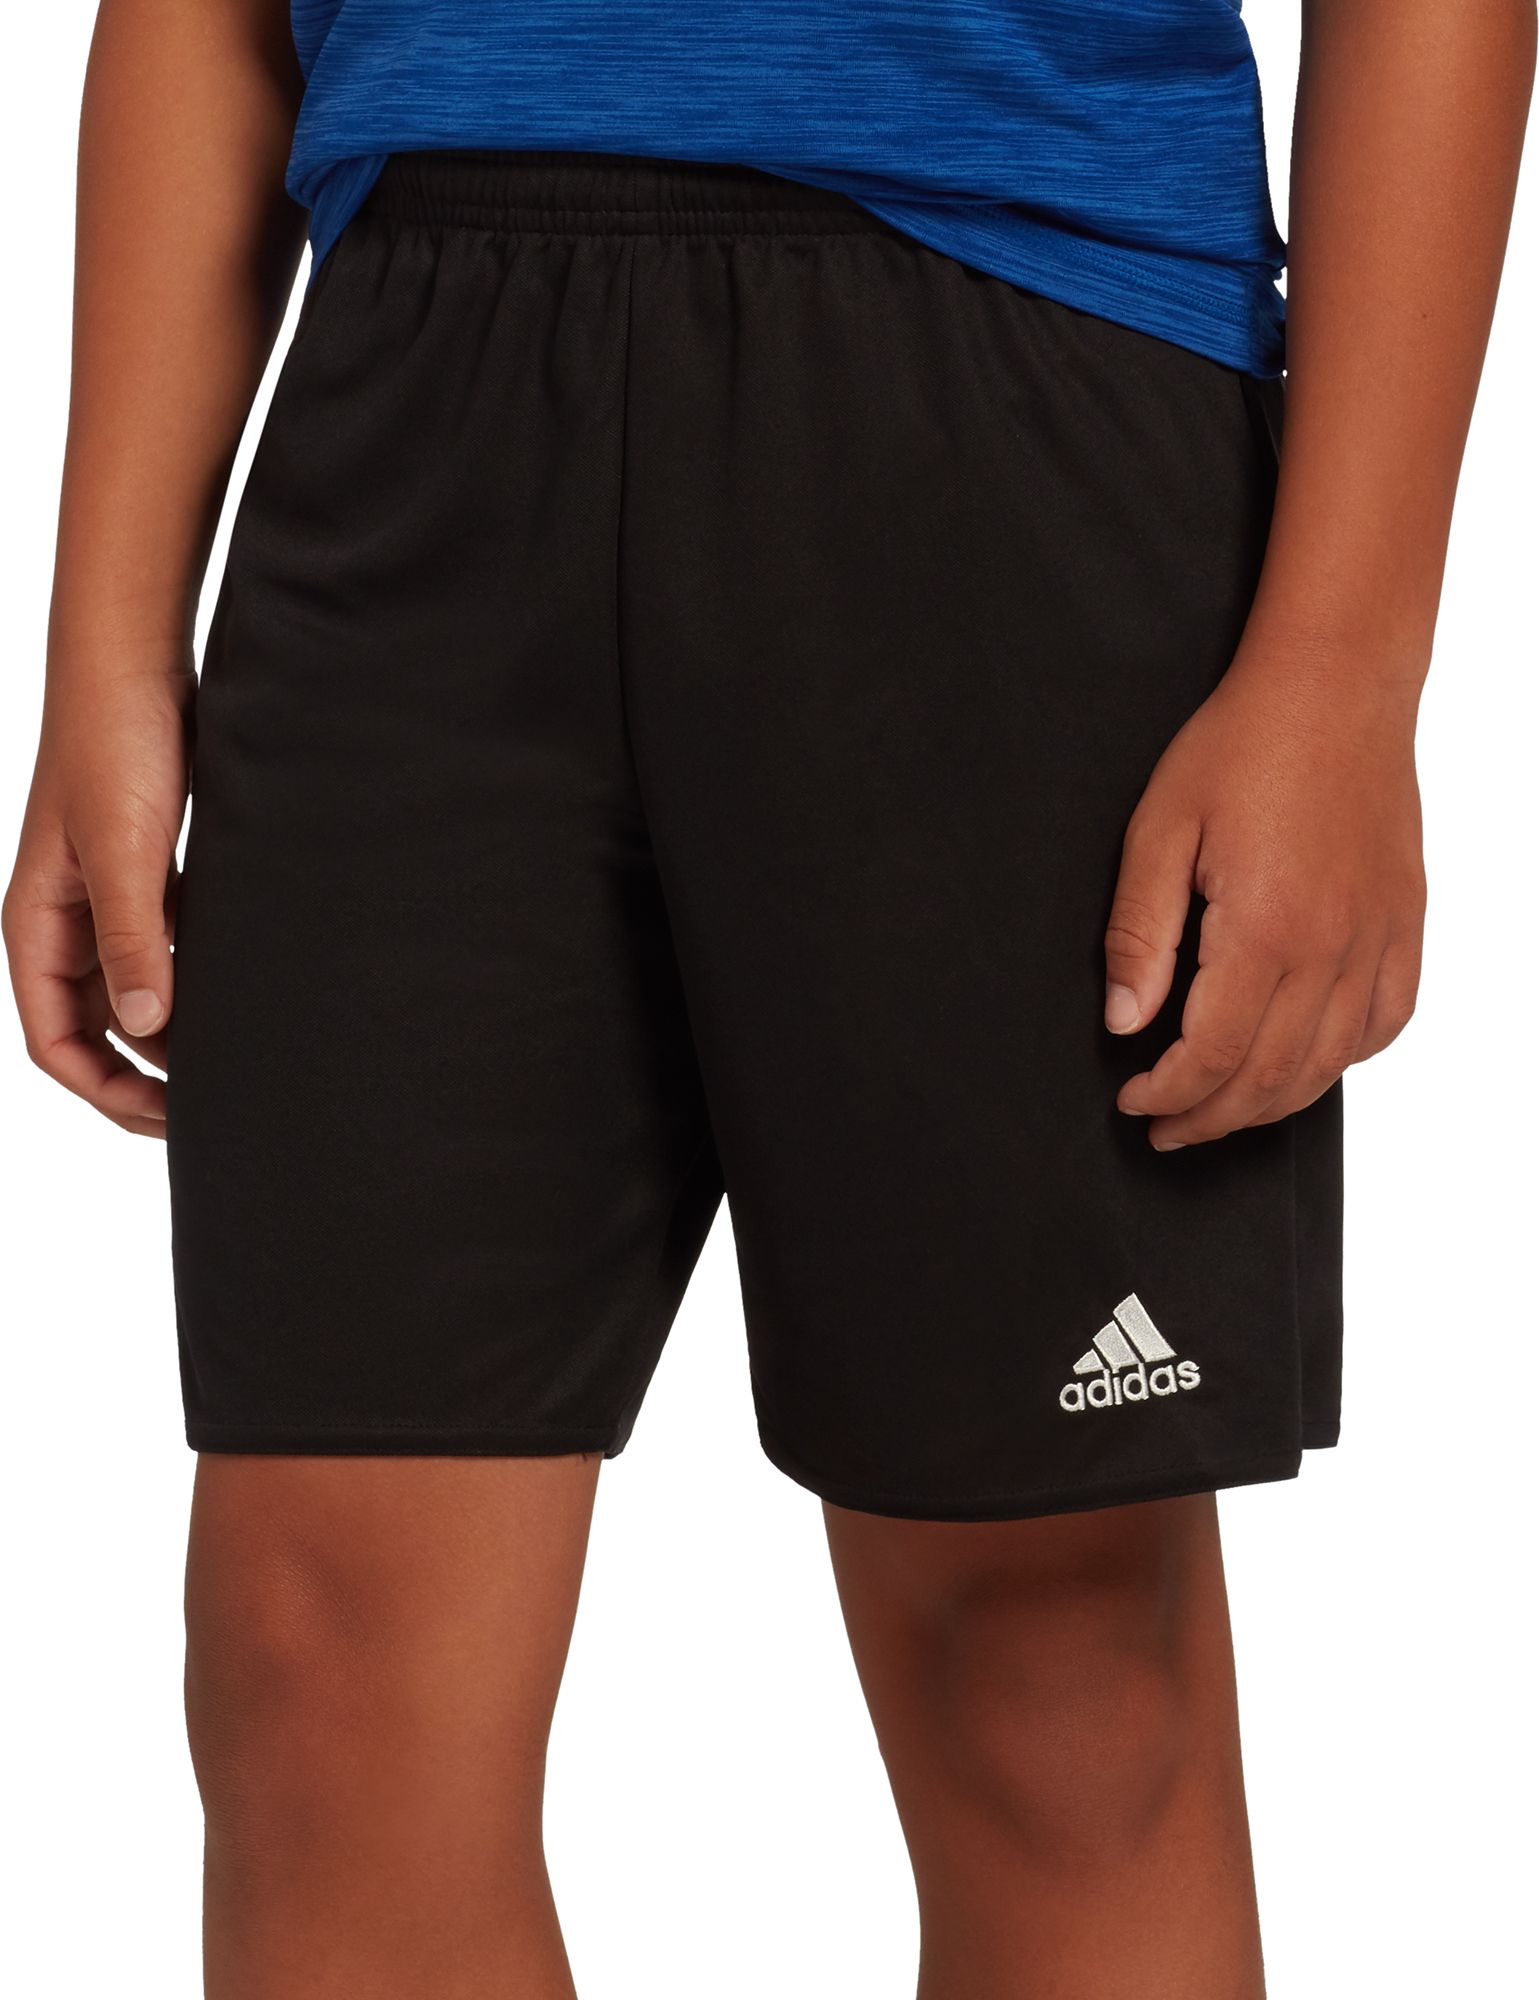 Adidas / Boys' Parma 16 Soccer Shorts